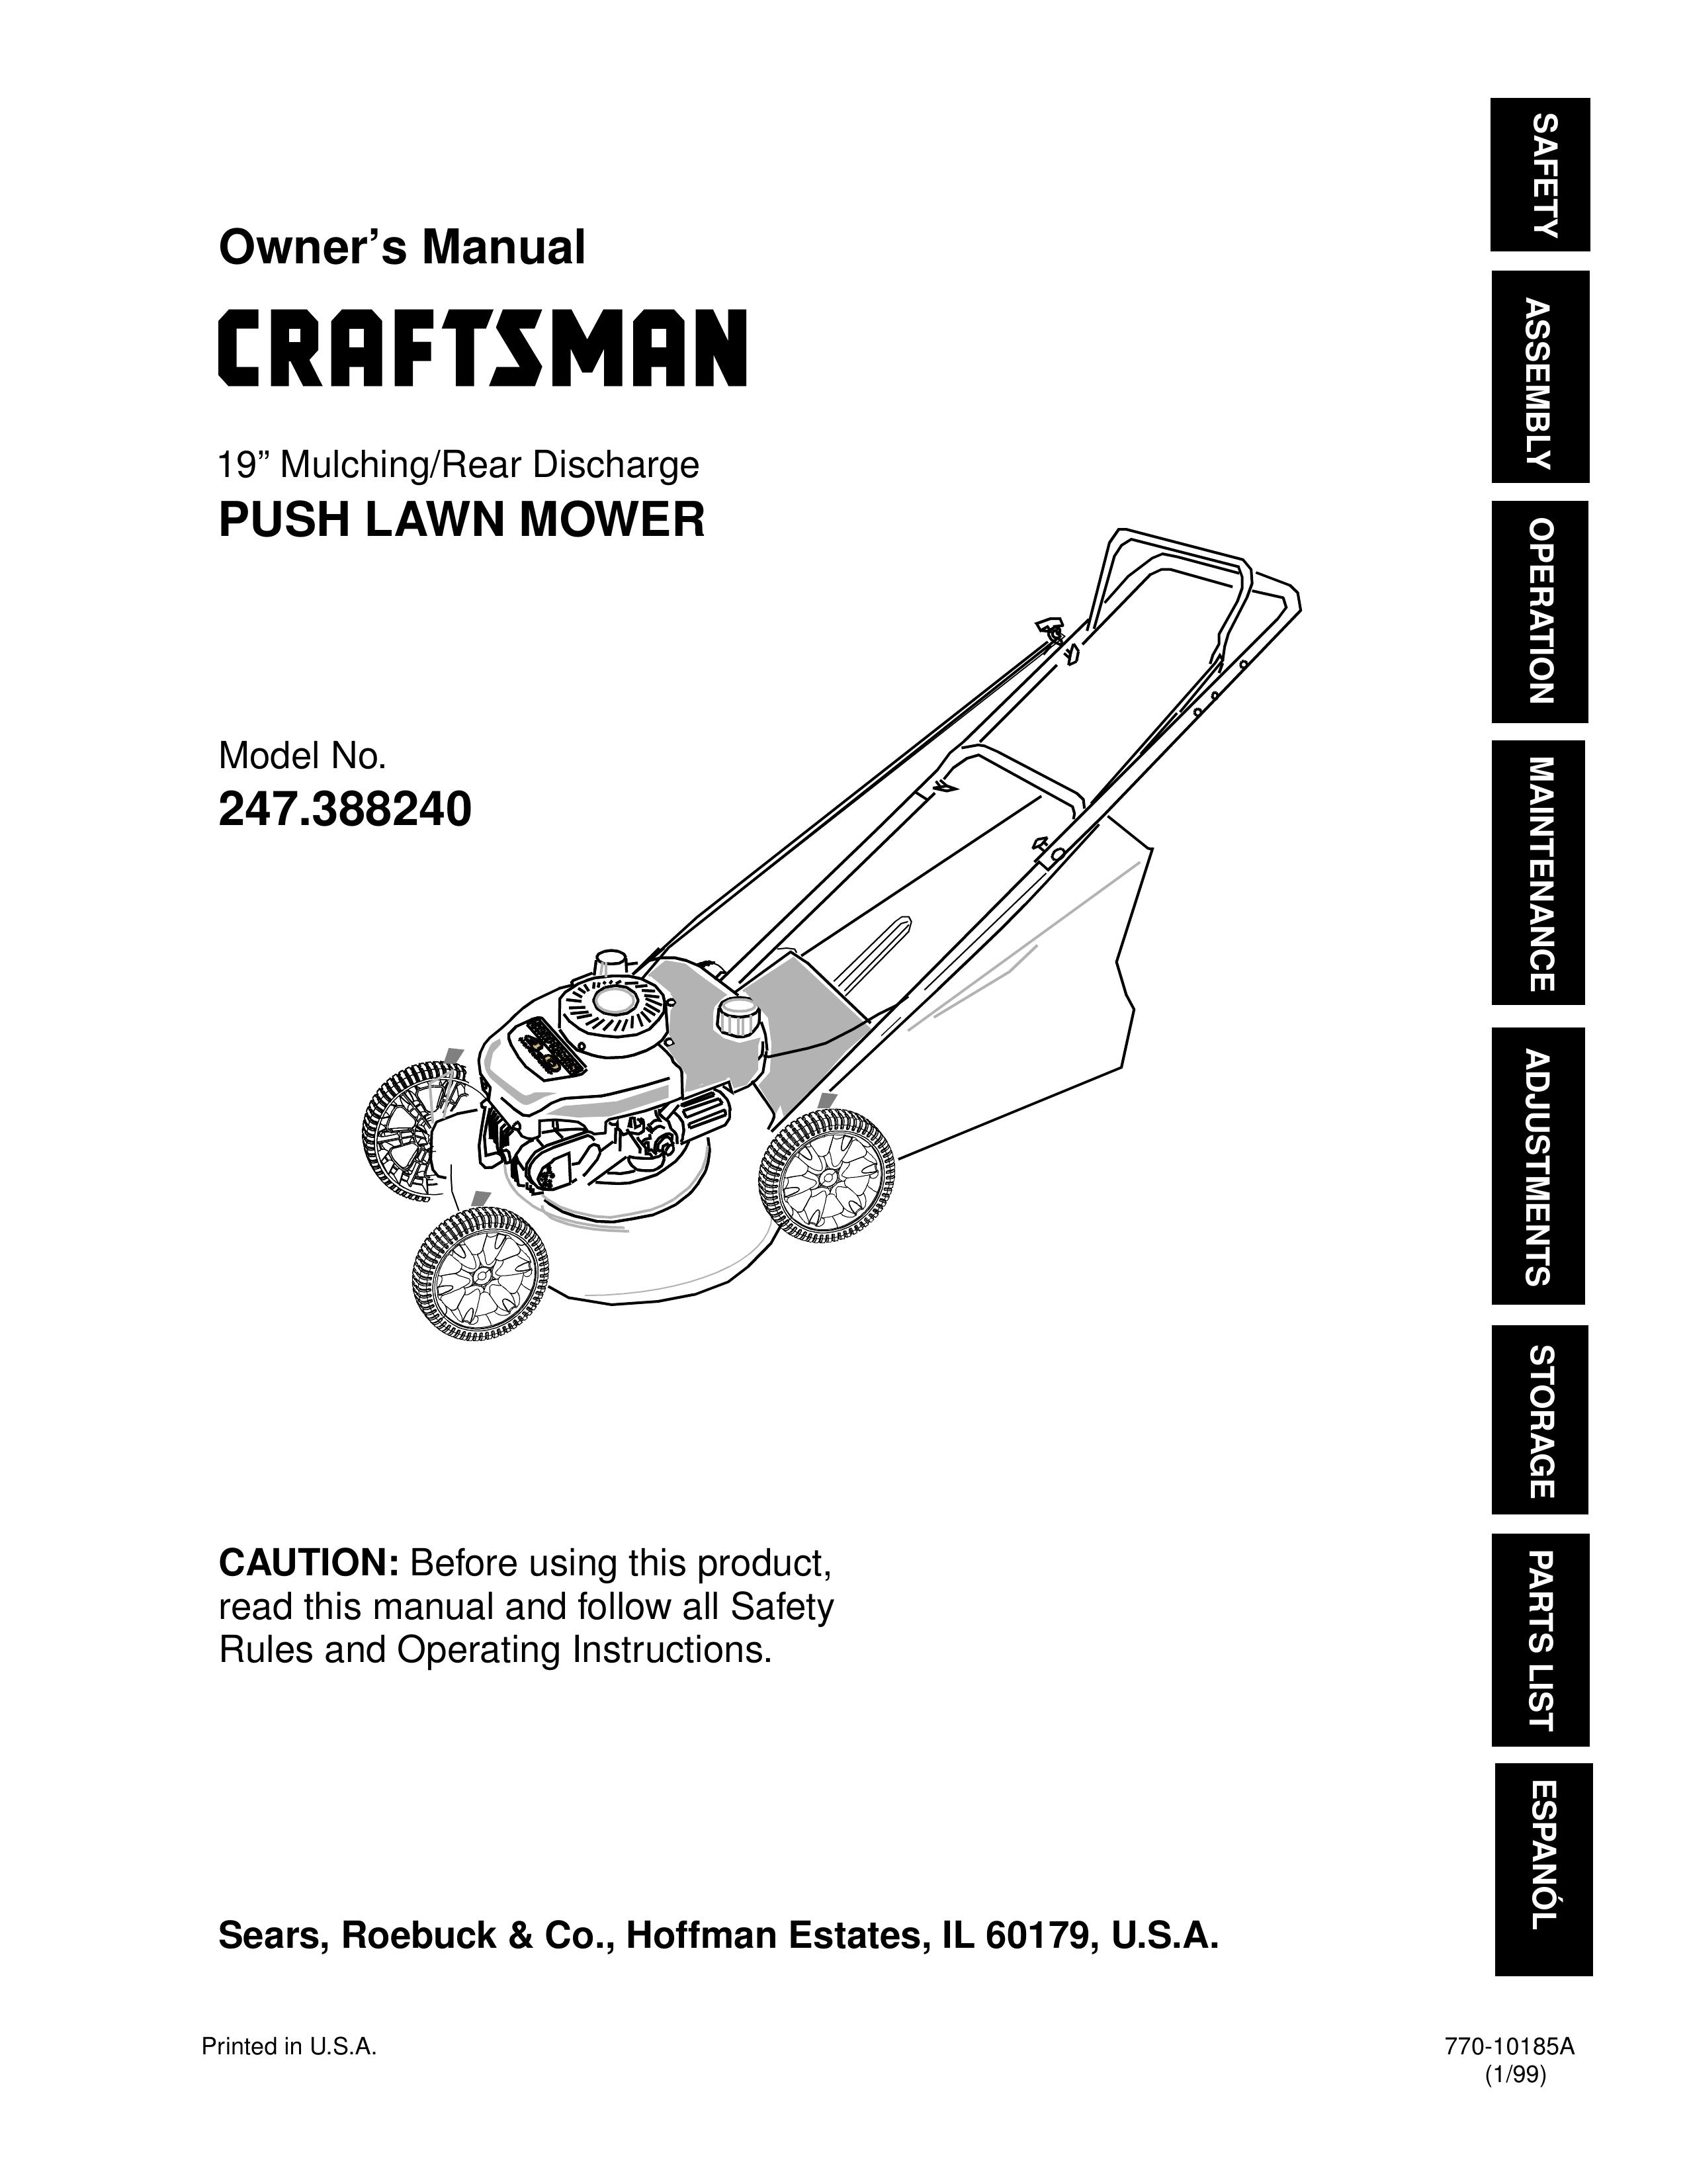 Craftsman 247.38824 Lawn Mower User Manual